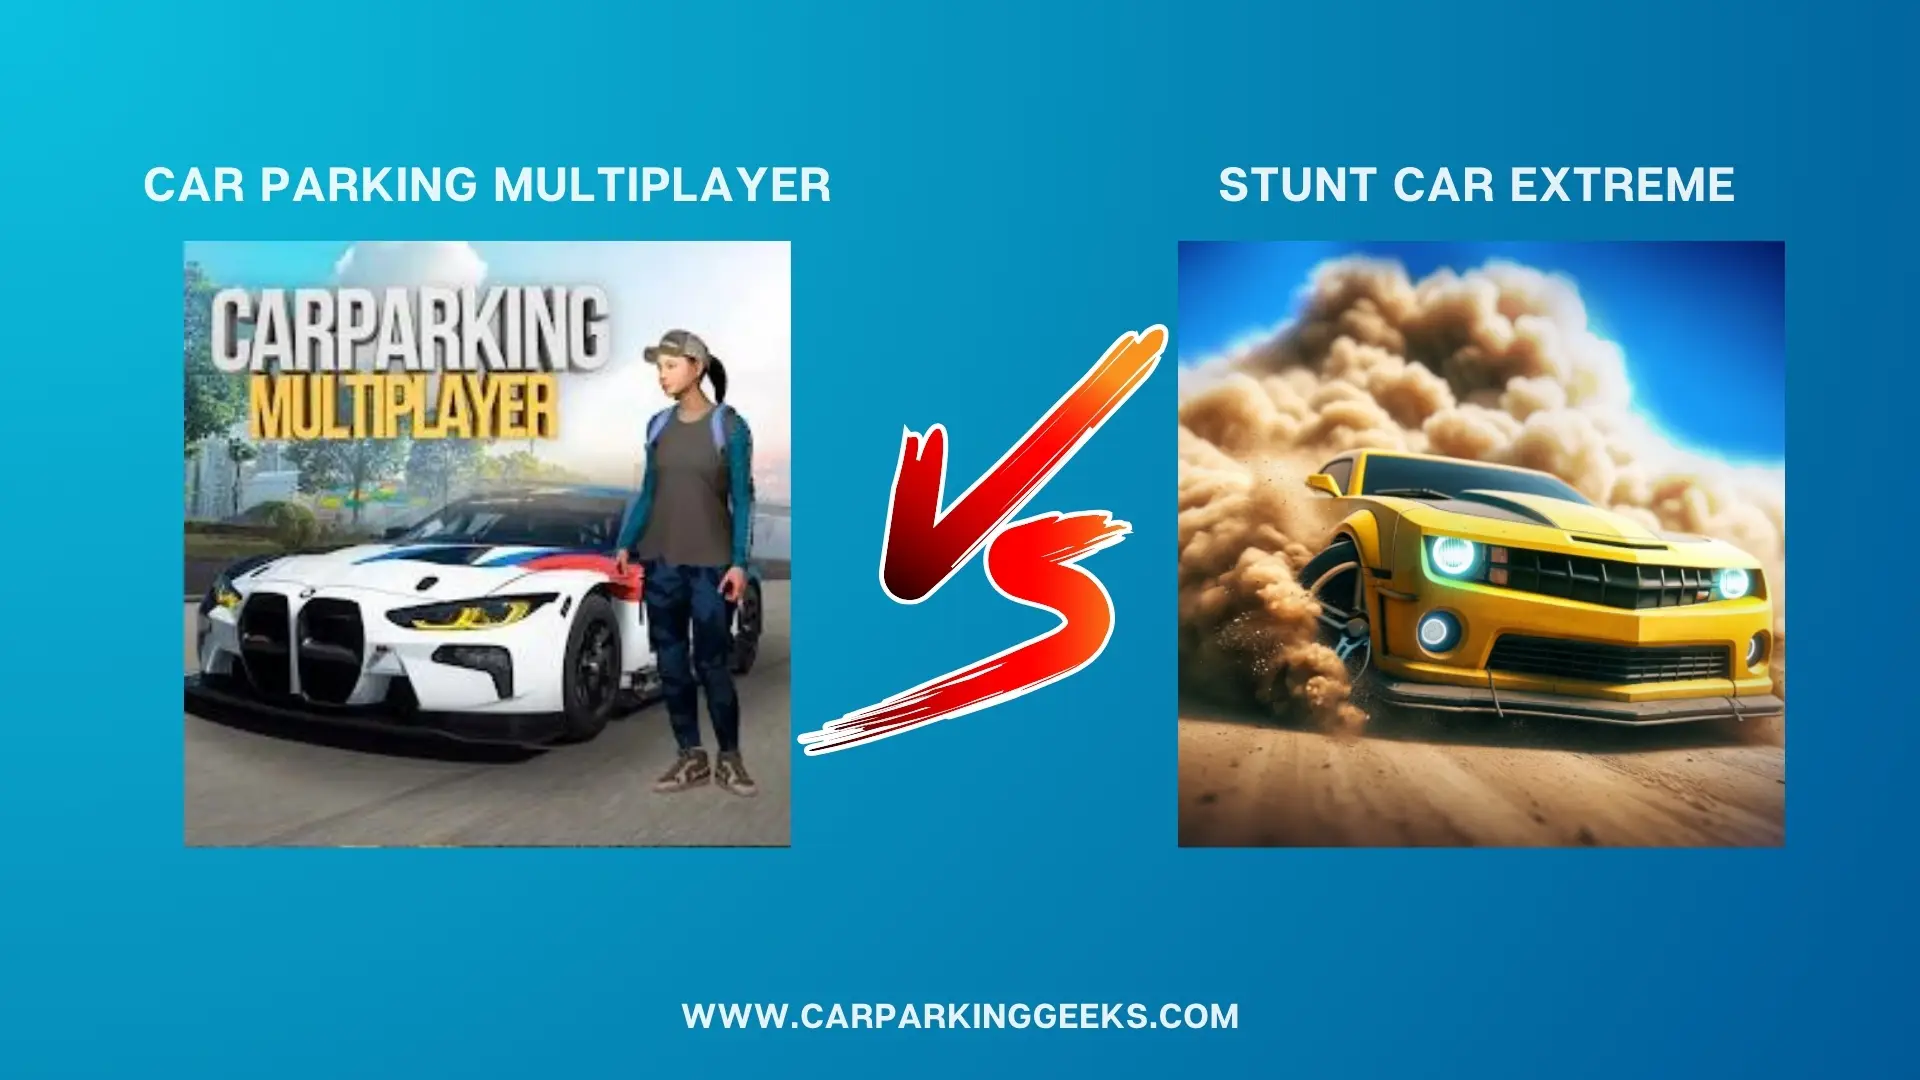 Car Parking Multiplayer vs Stunt Car Extreme